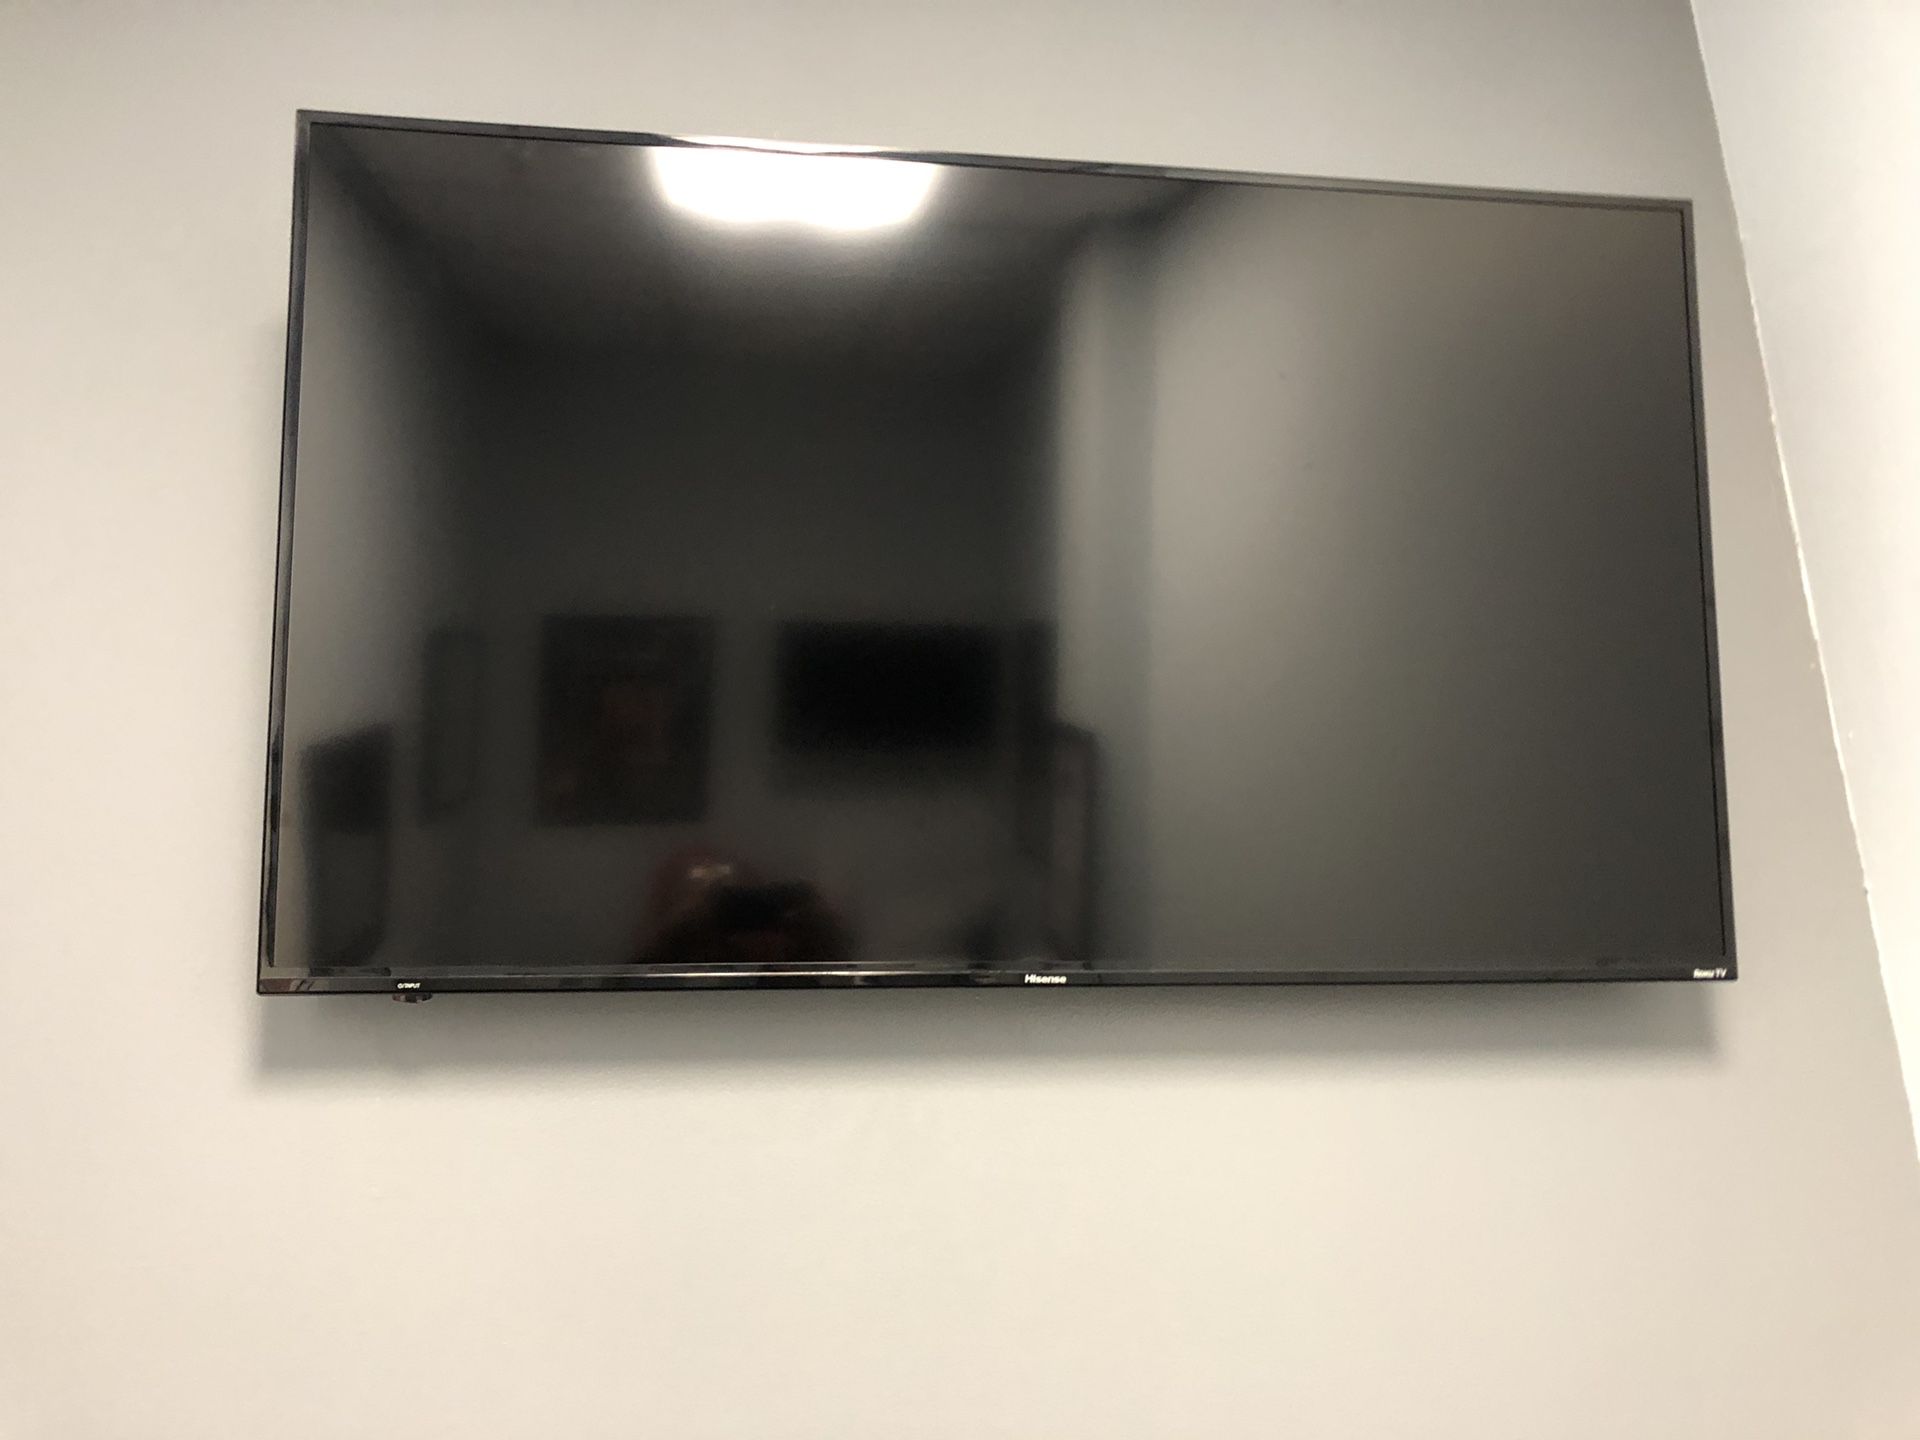 50 inch tv